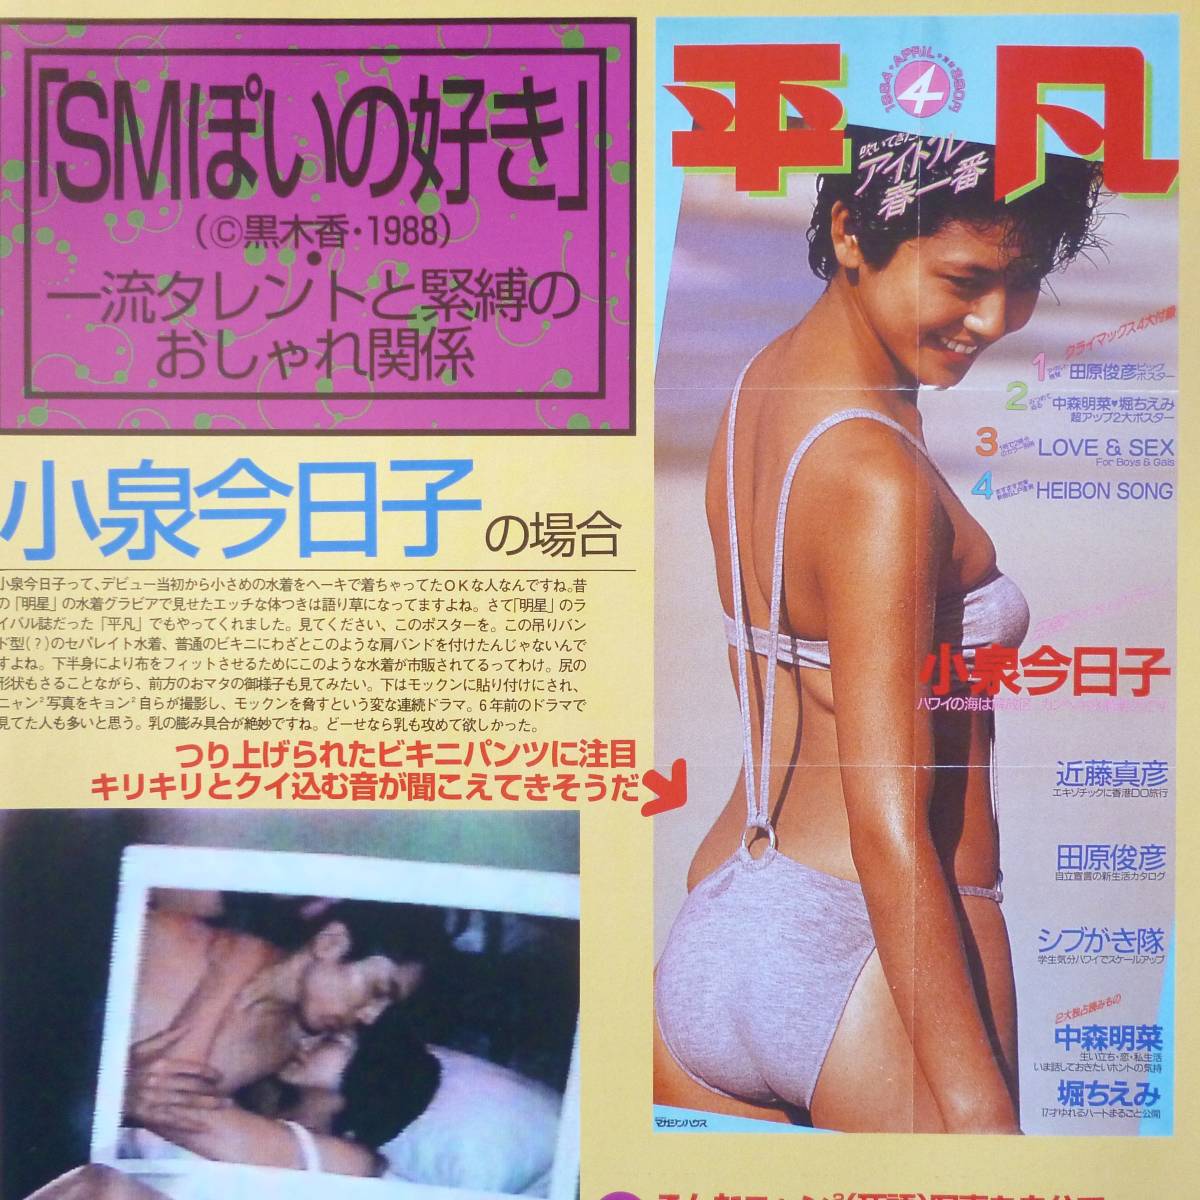 1980年代緊縛画像 SM美虐フォト 未発表・美女緊縛写真集 漫画エロス1980年12月増刊号